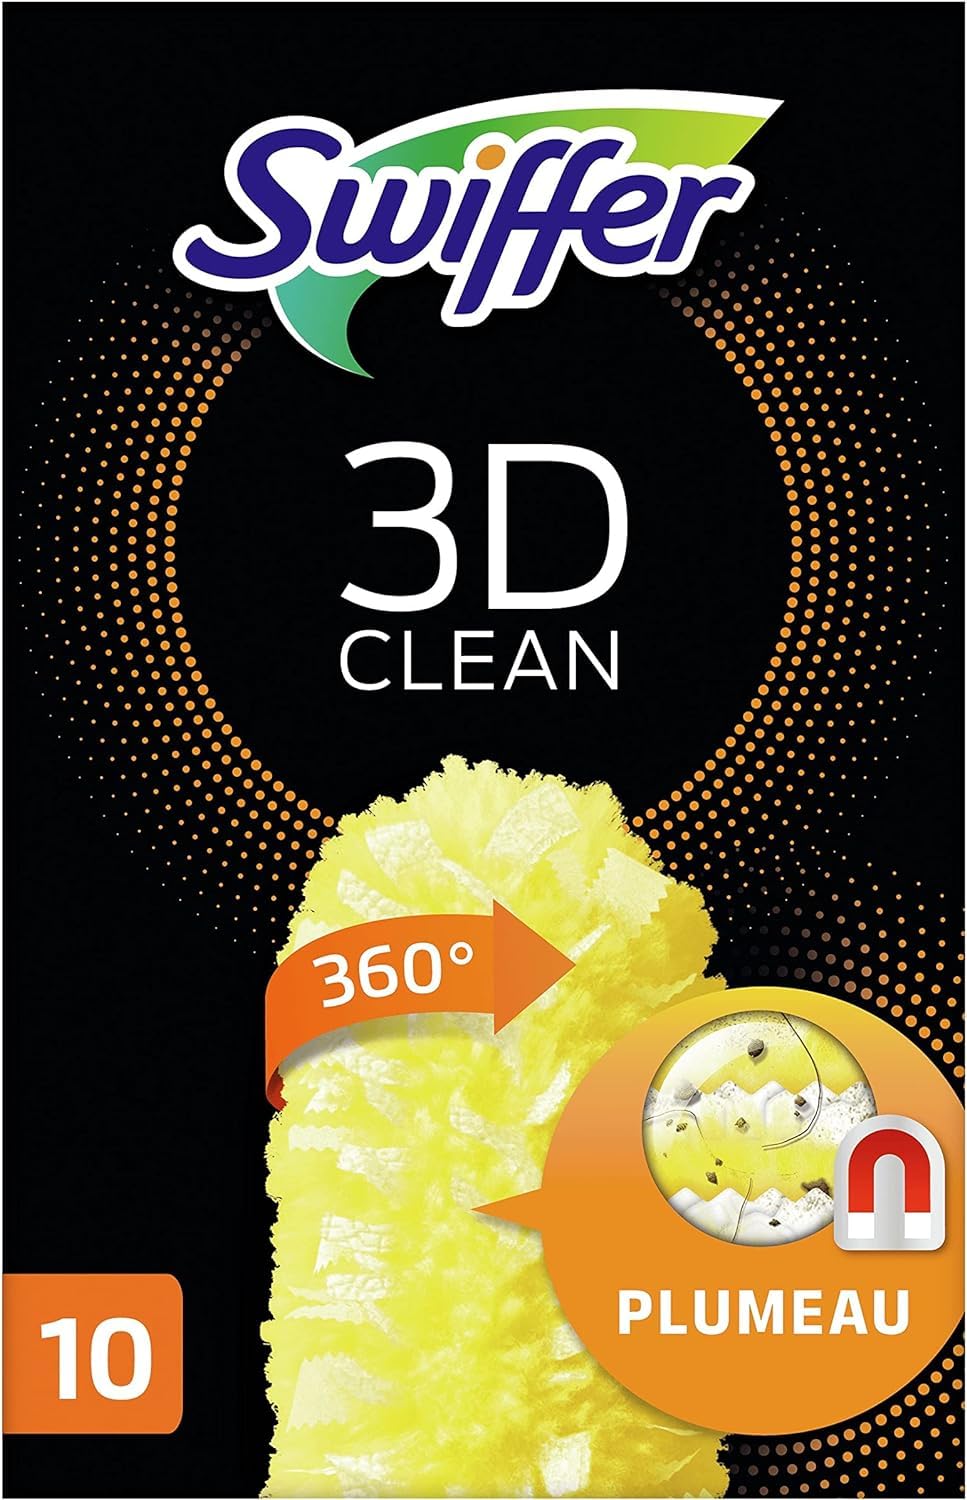 pas cher Swiffer Duster Plumeau Nettoyage 3D 360, Attra